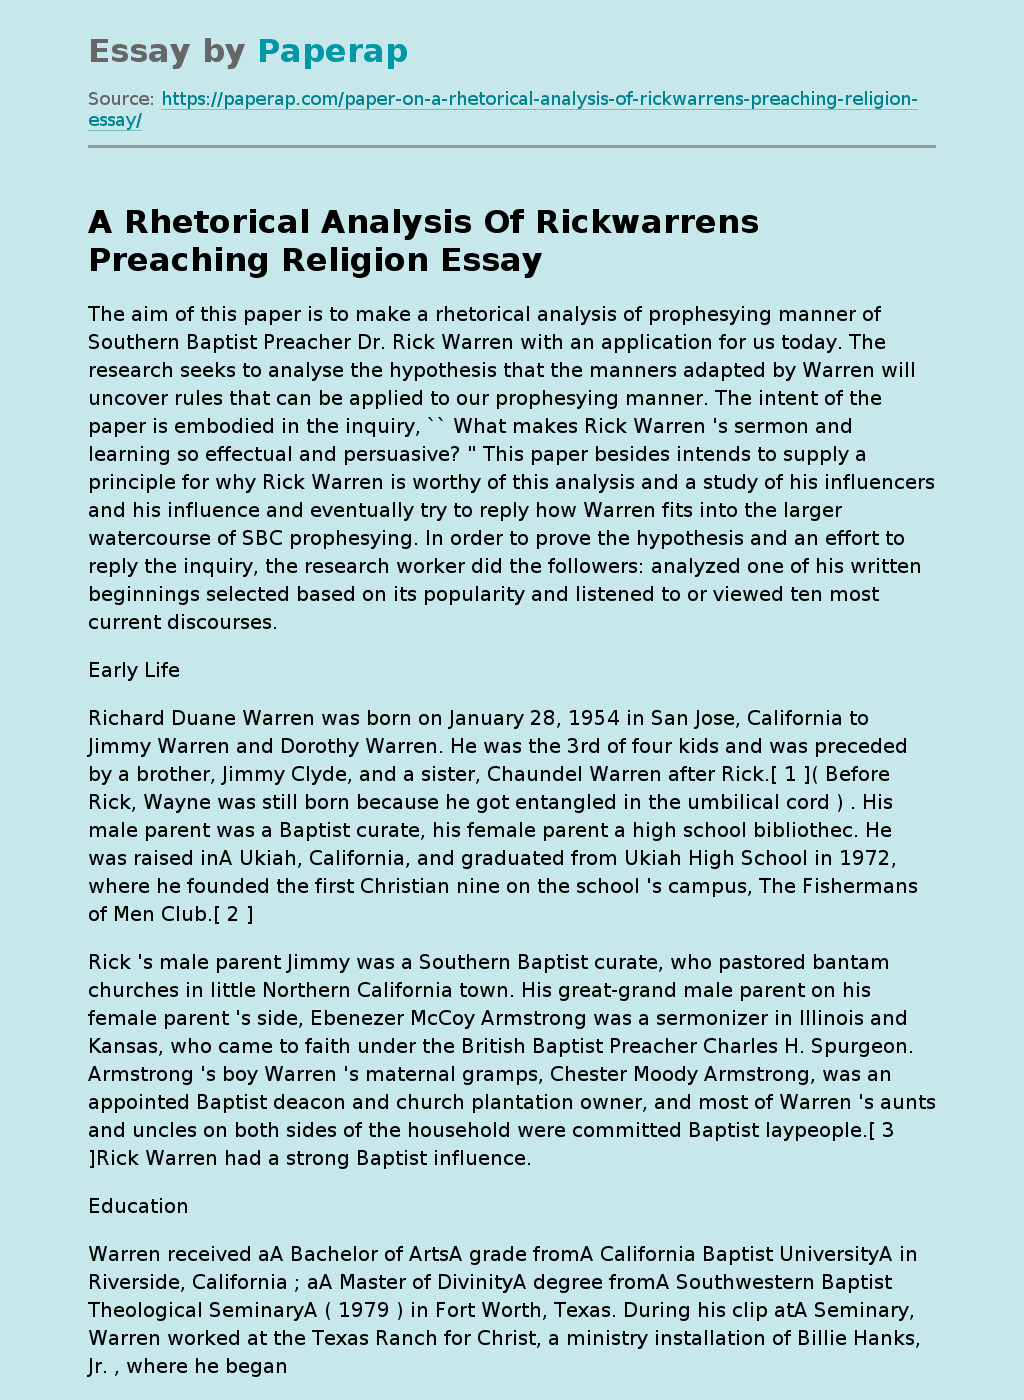 A Rhetorical Analysis Of Rickwarrens Preaching Religion